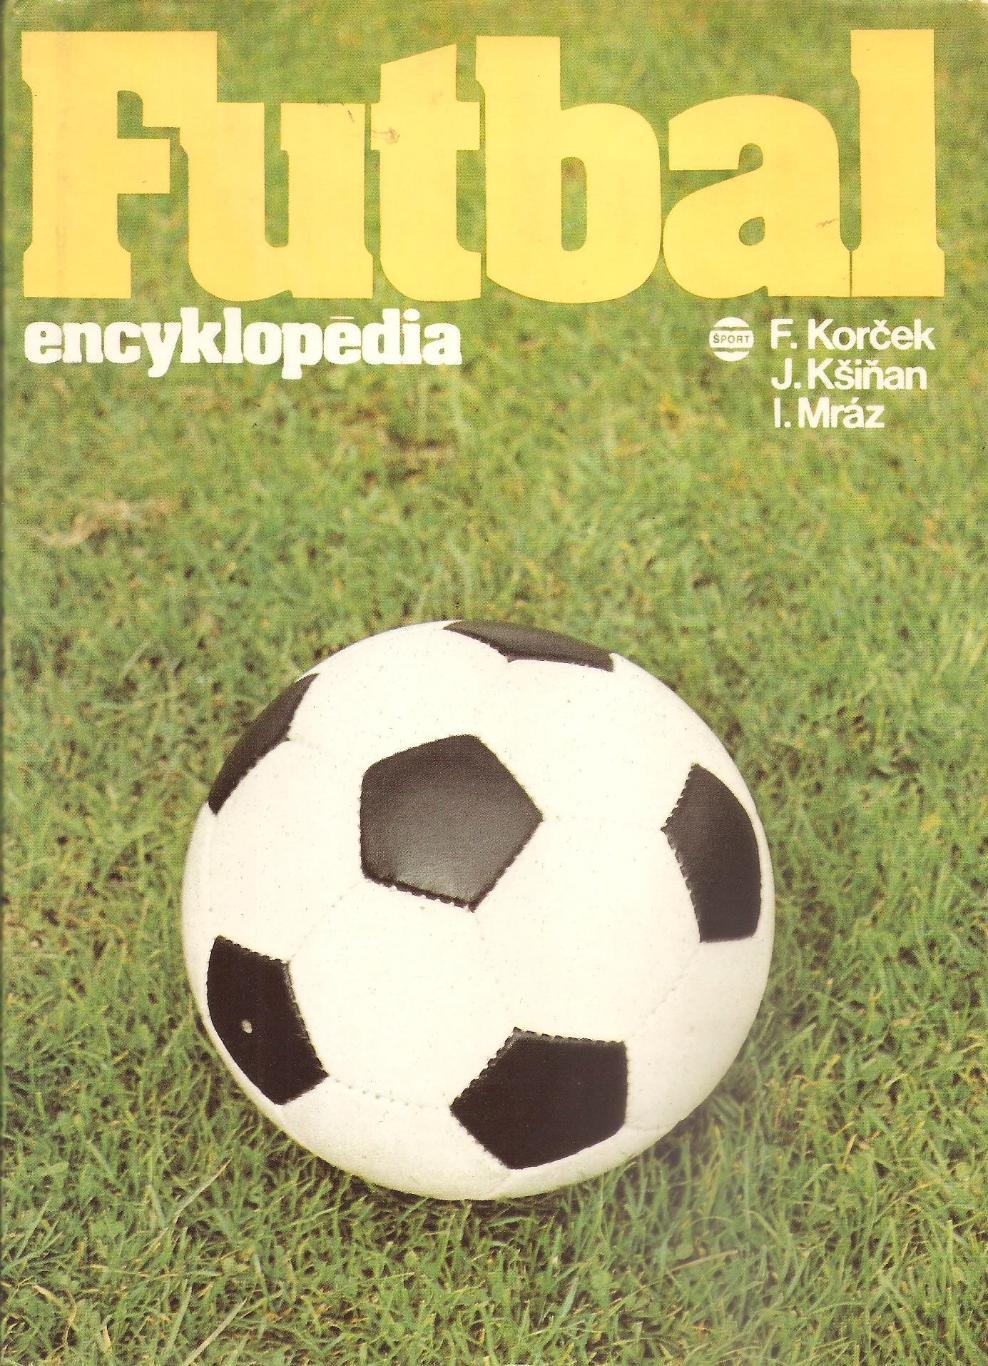 Энциклопедия футбола. Futbal encyklopedia. 1986, F.Korcek J.Ksinan I.Mraz.